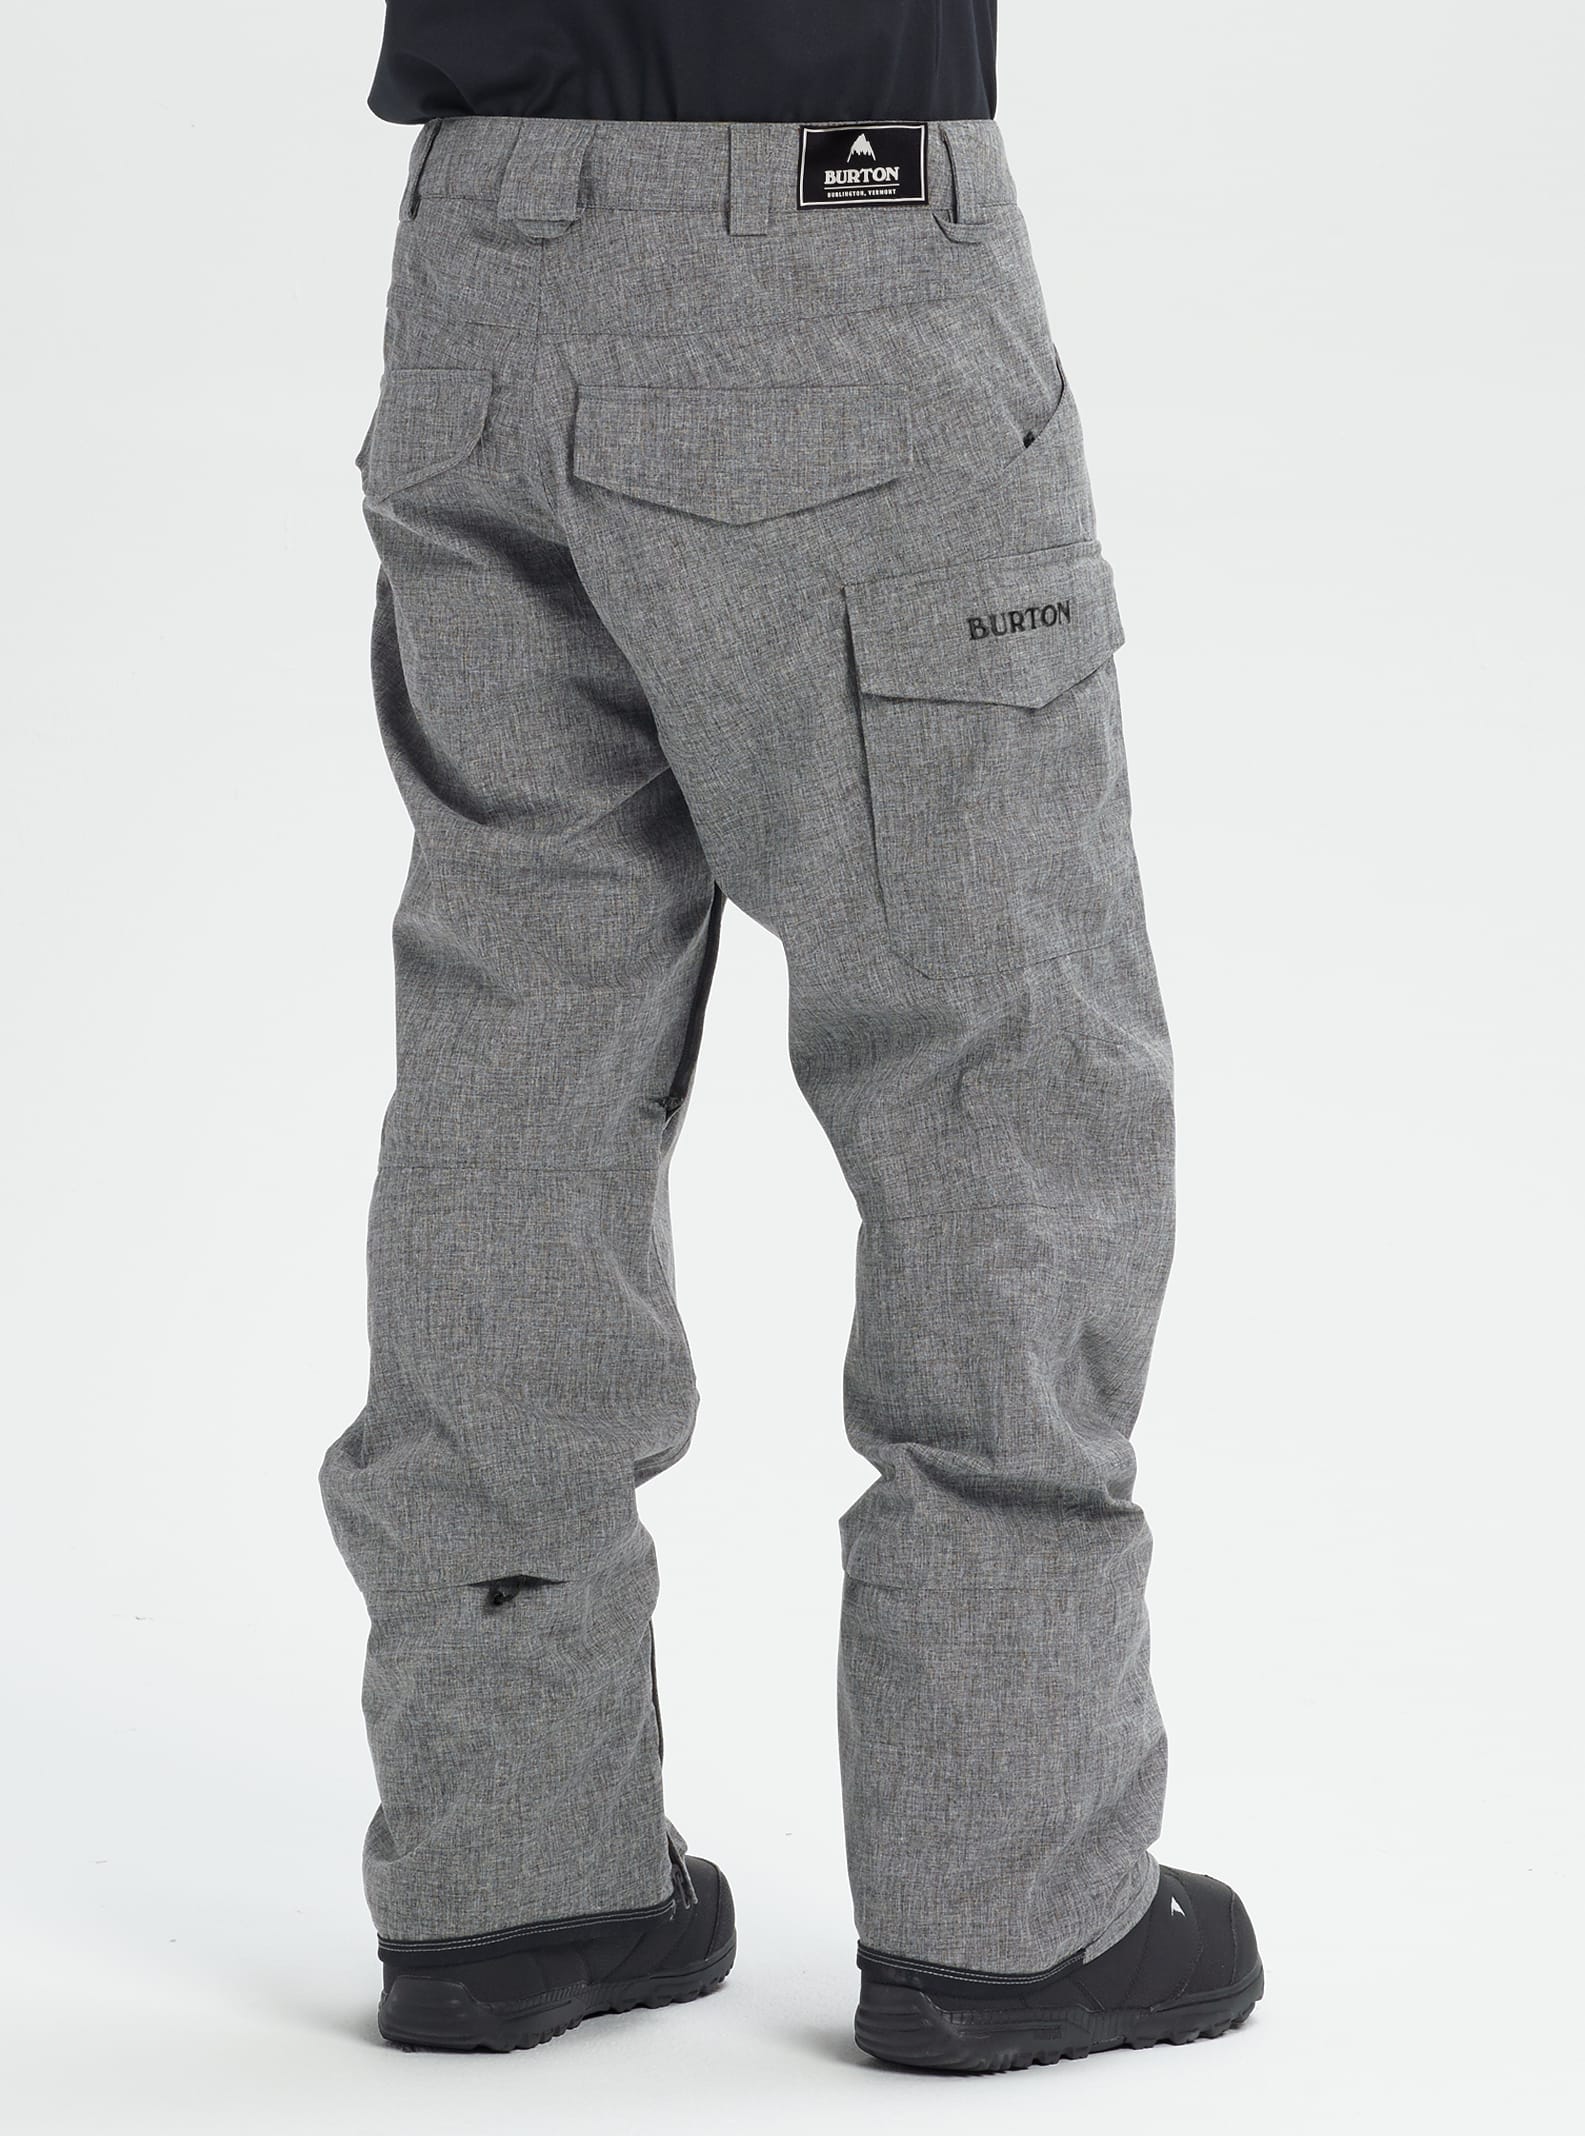 Quicksilver High-Line Travis Rice DryFlight 20K Stretch Snow Pants Size S |  eBay